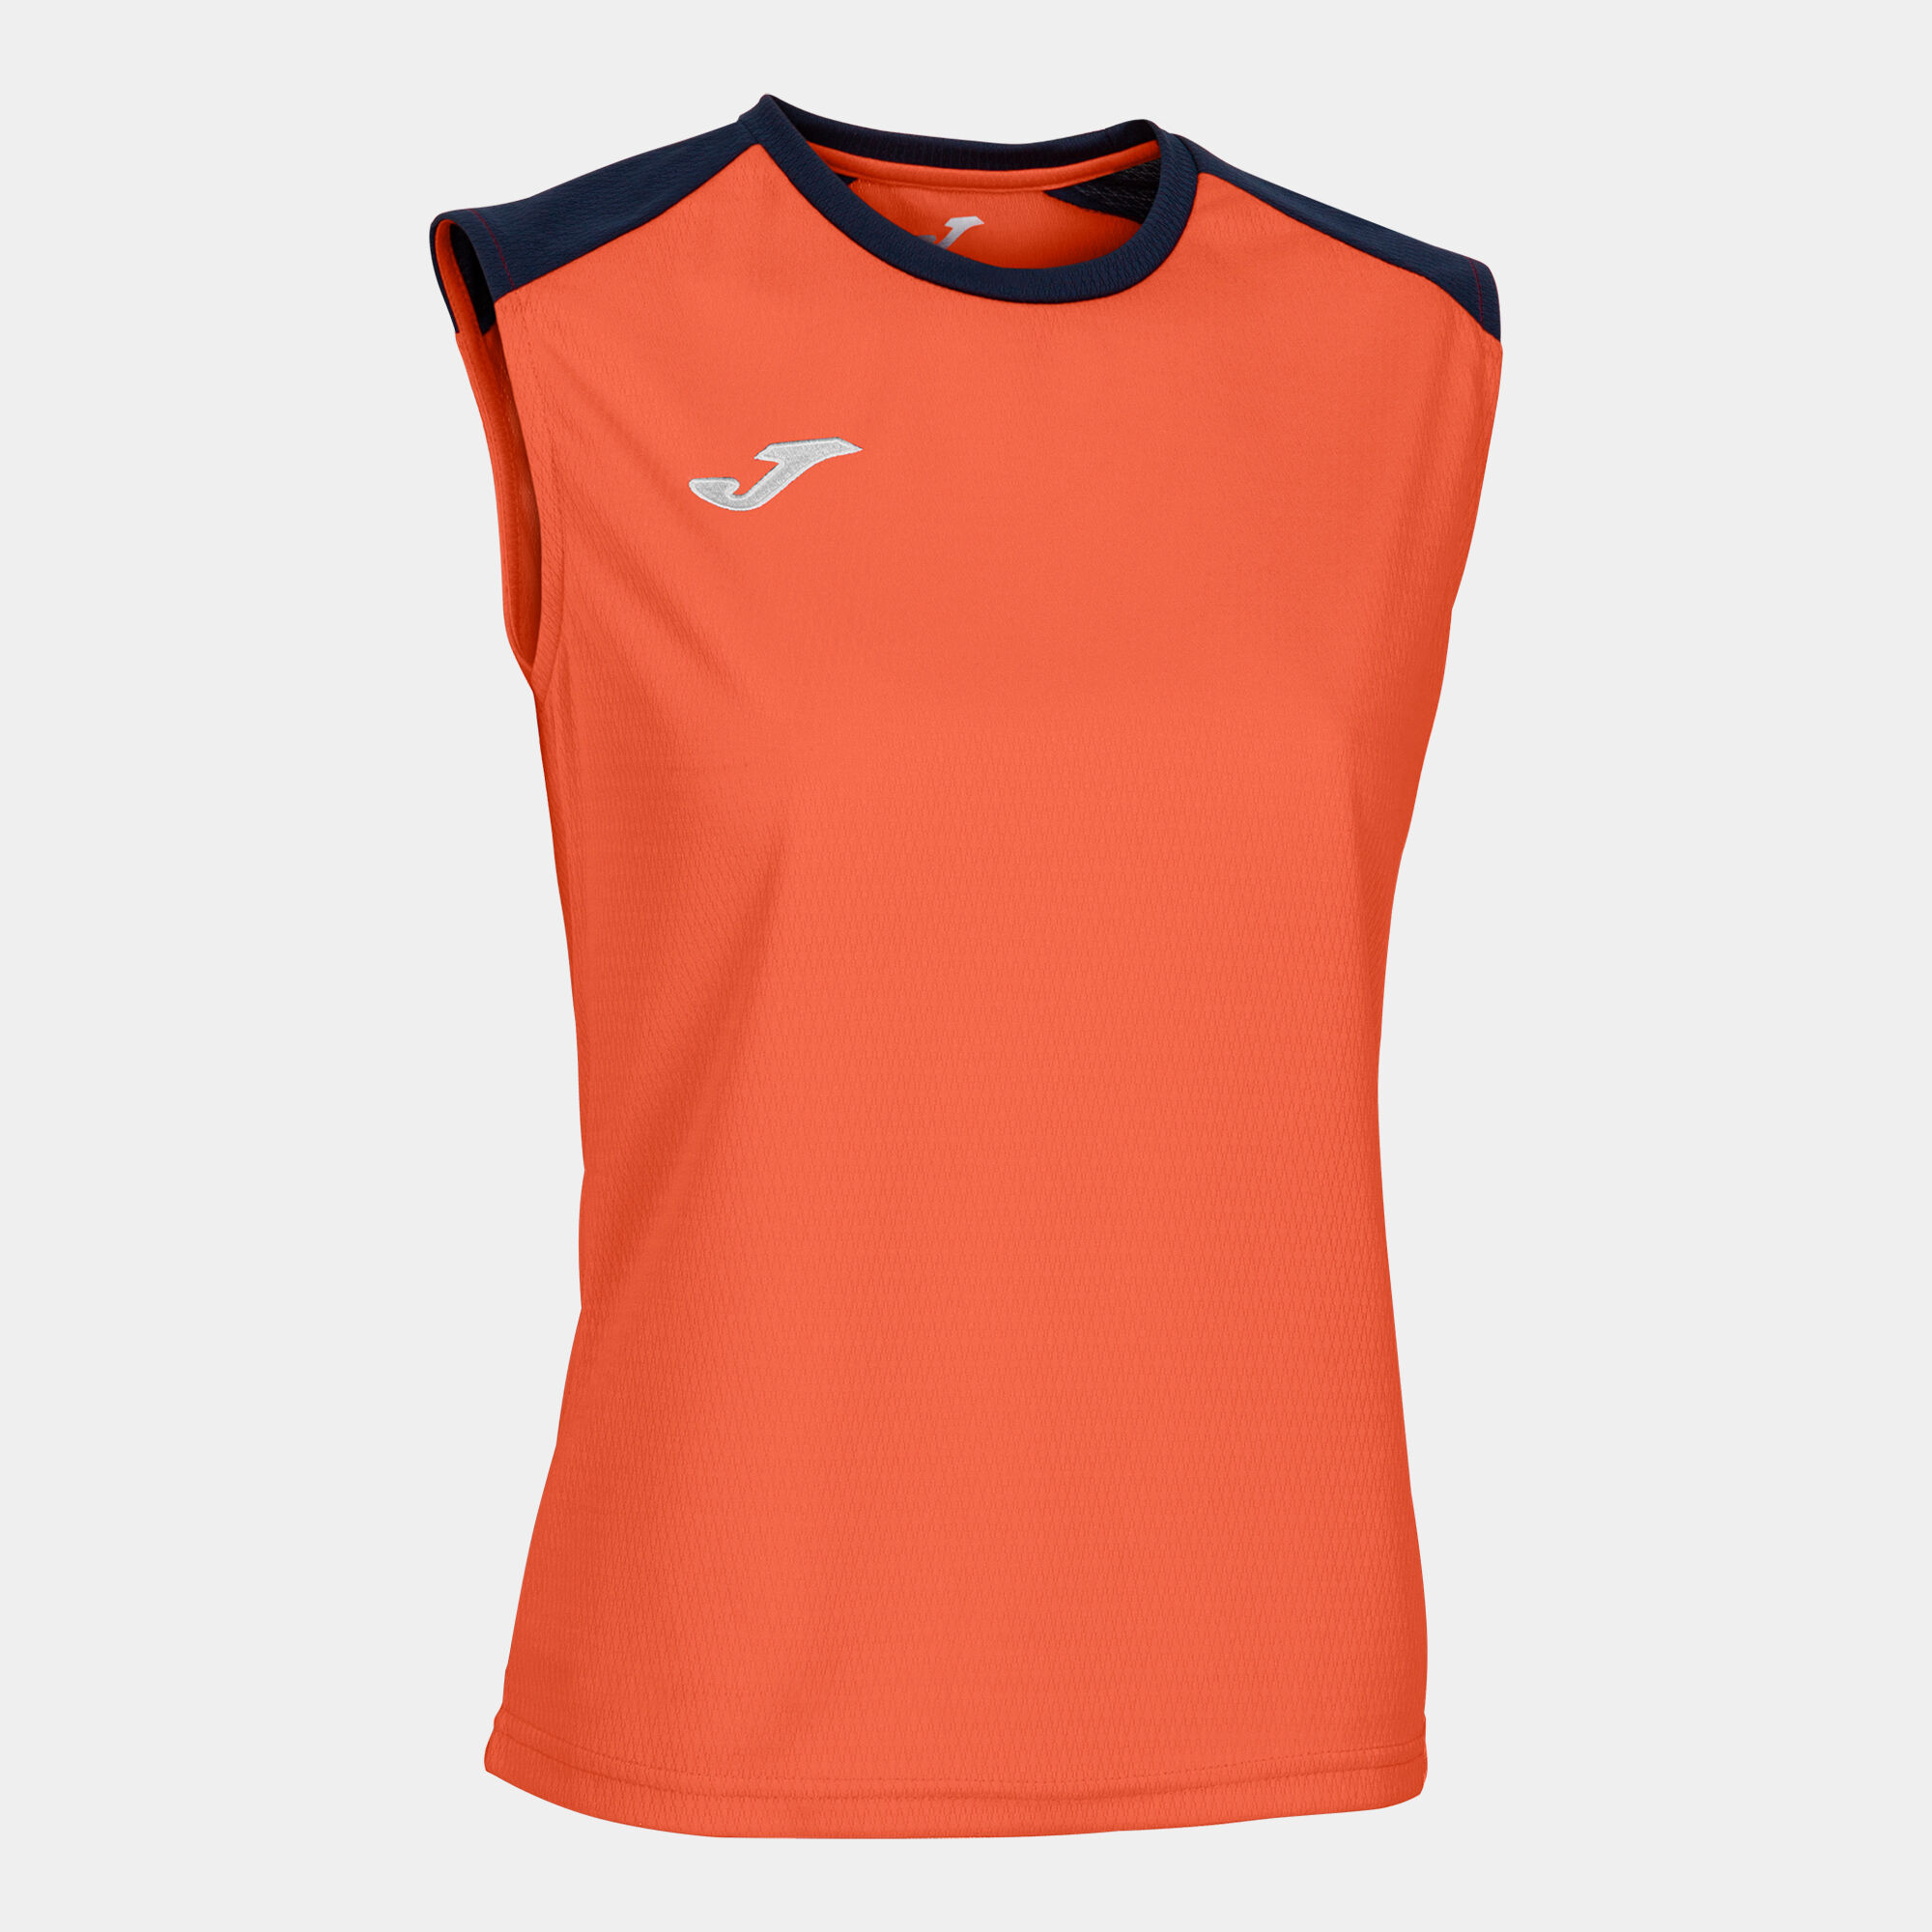 Camiseta tirantes mujer Eco Championship naranja flúor marino